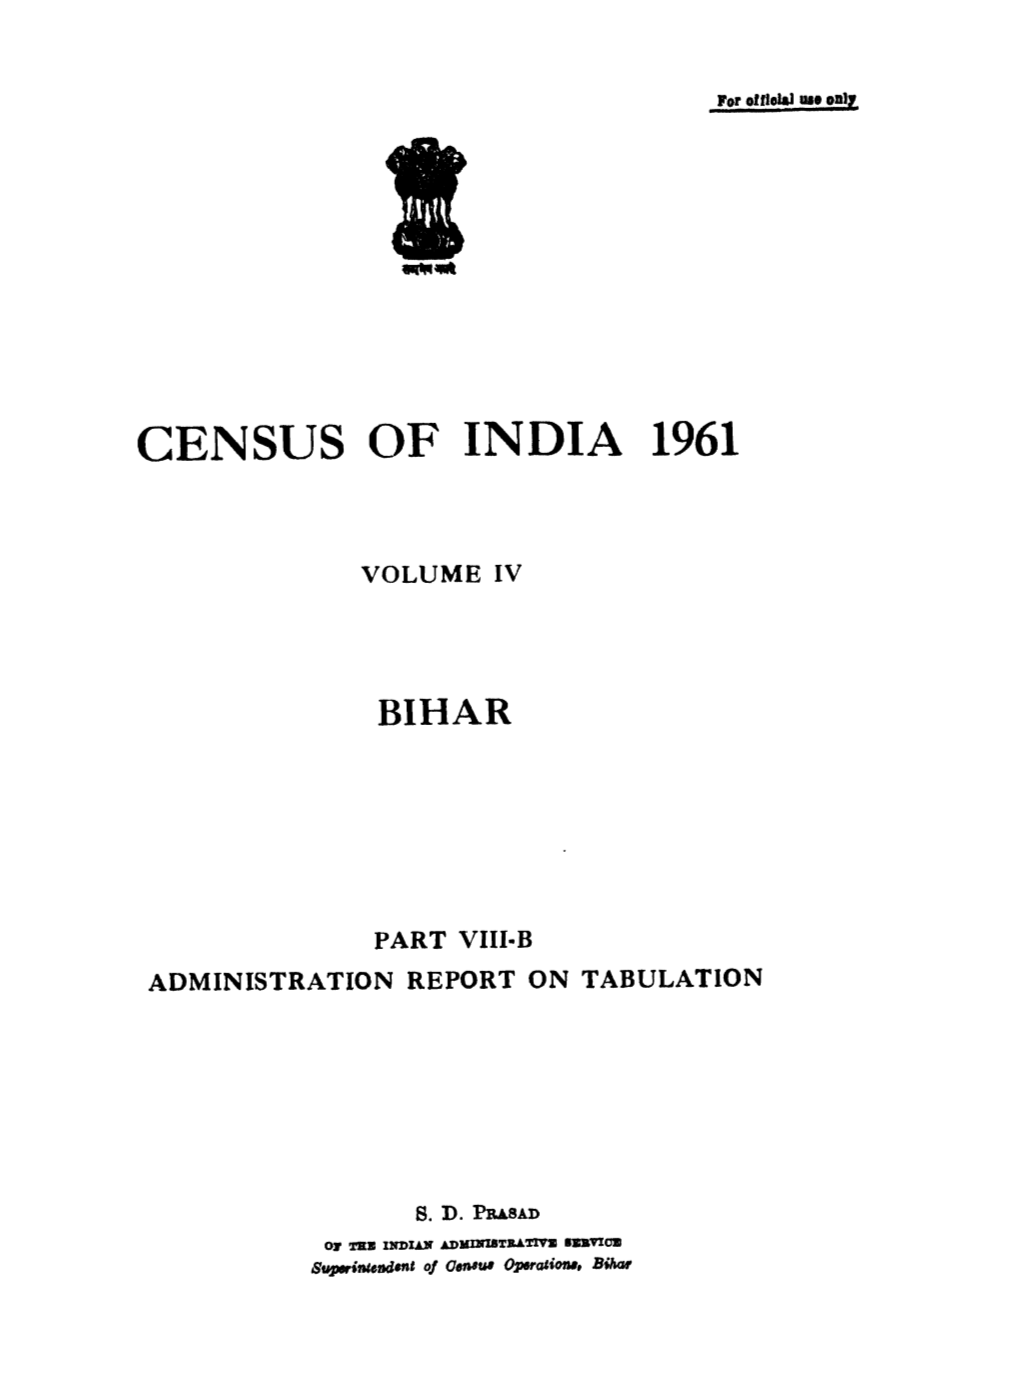 Administration Report on Tabulation, Part VIII-B, Volume-IV, Bihar